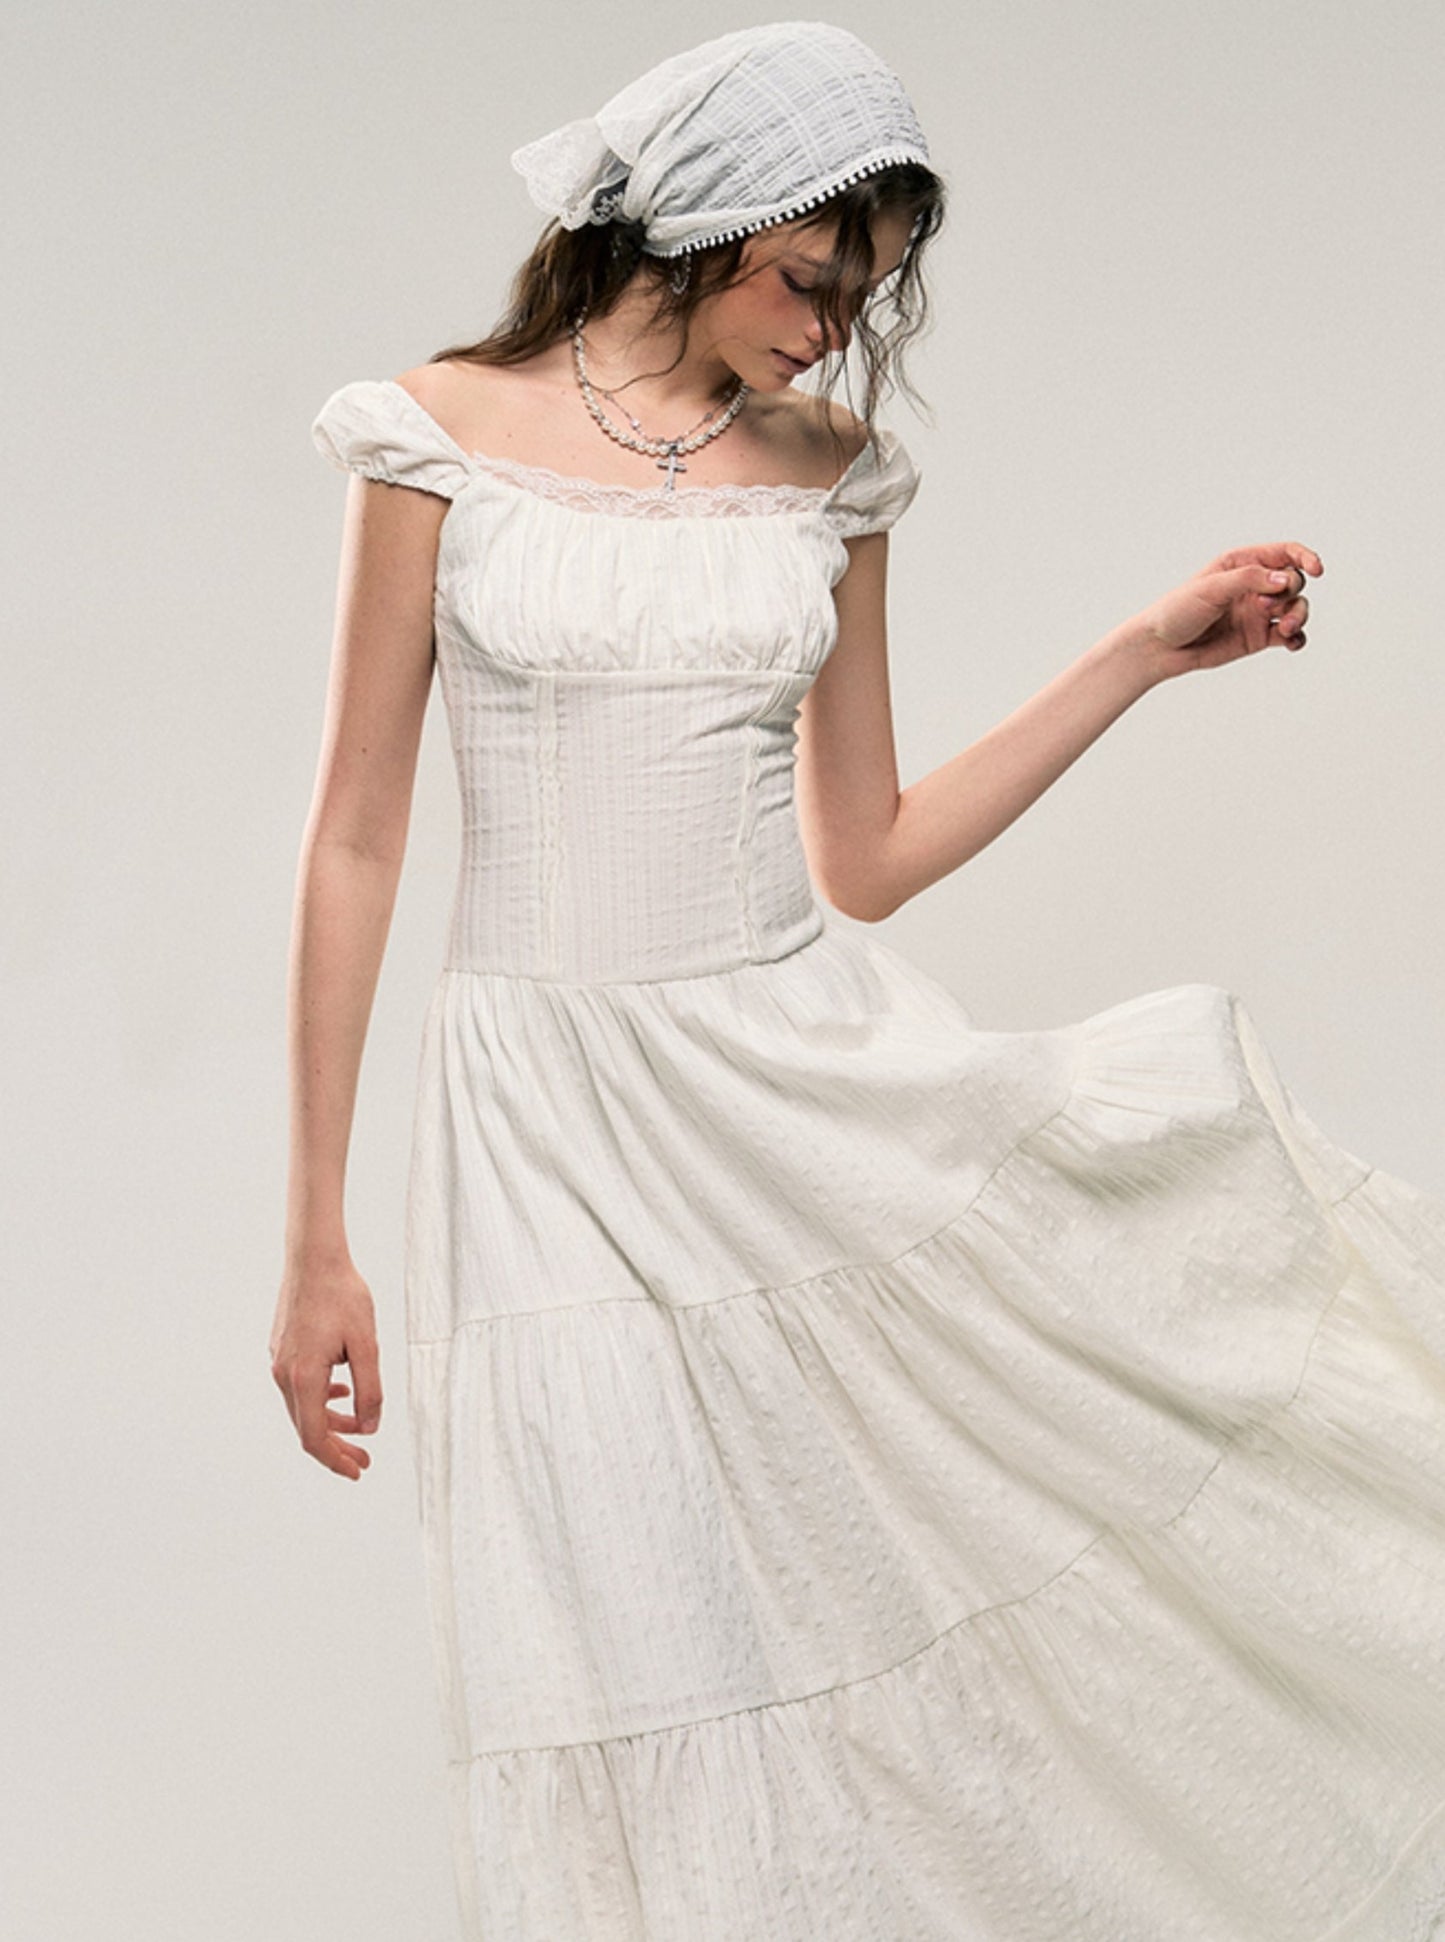 French Lace Cotton Dress